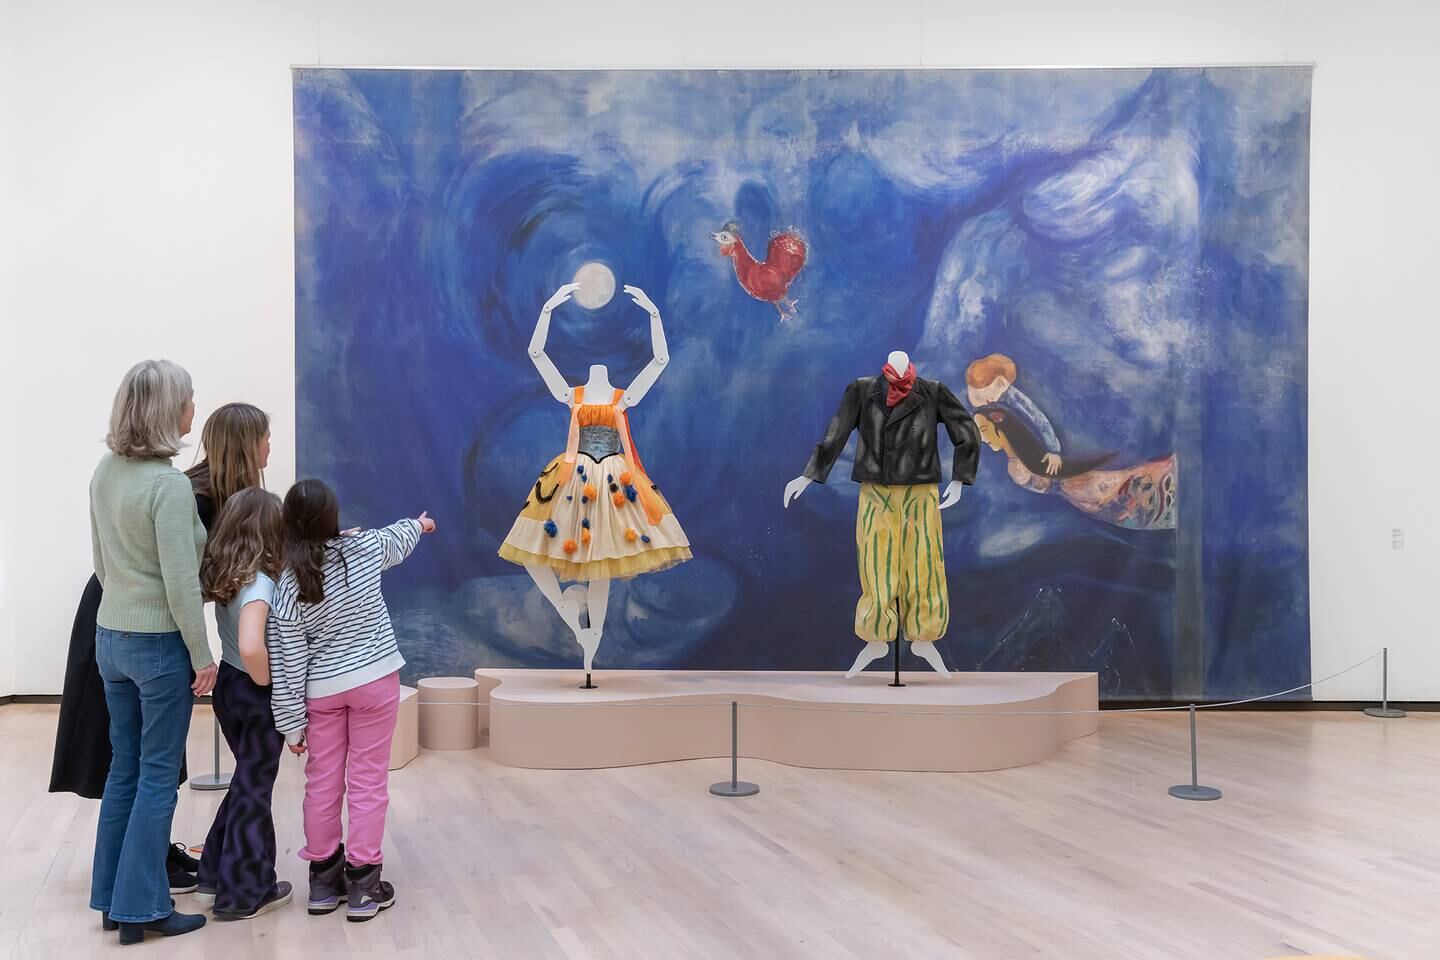 Chagall - Henie Onstad